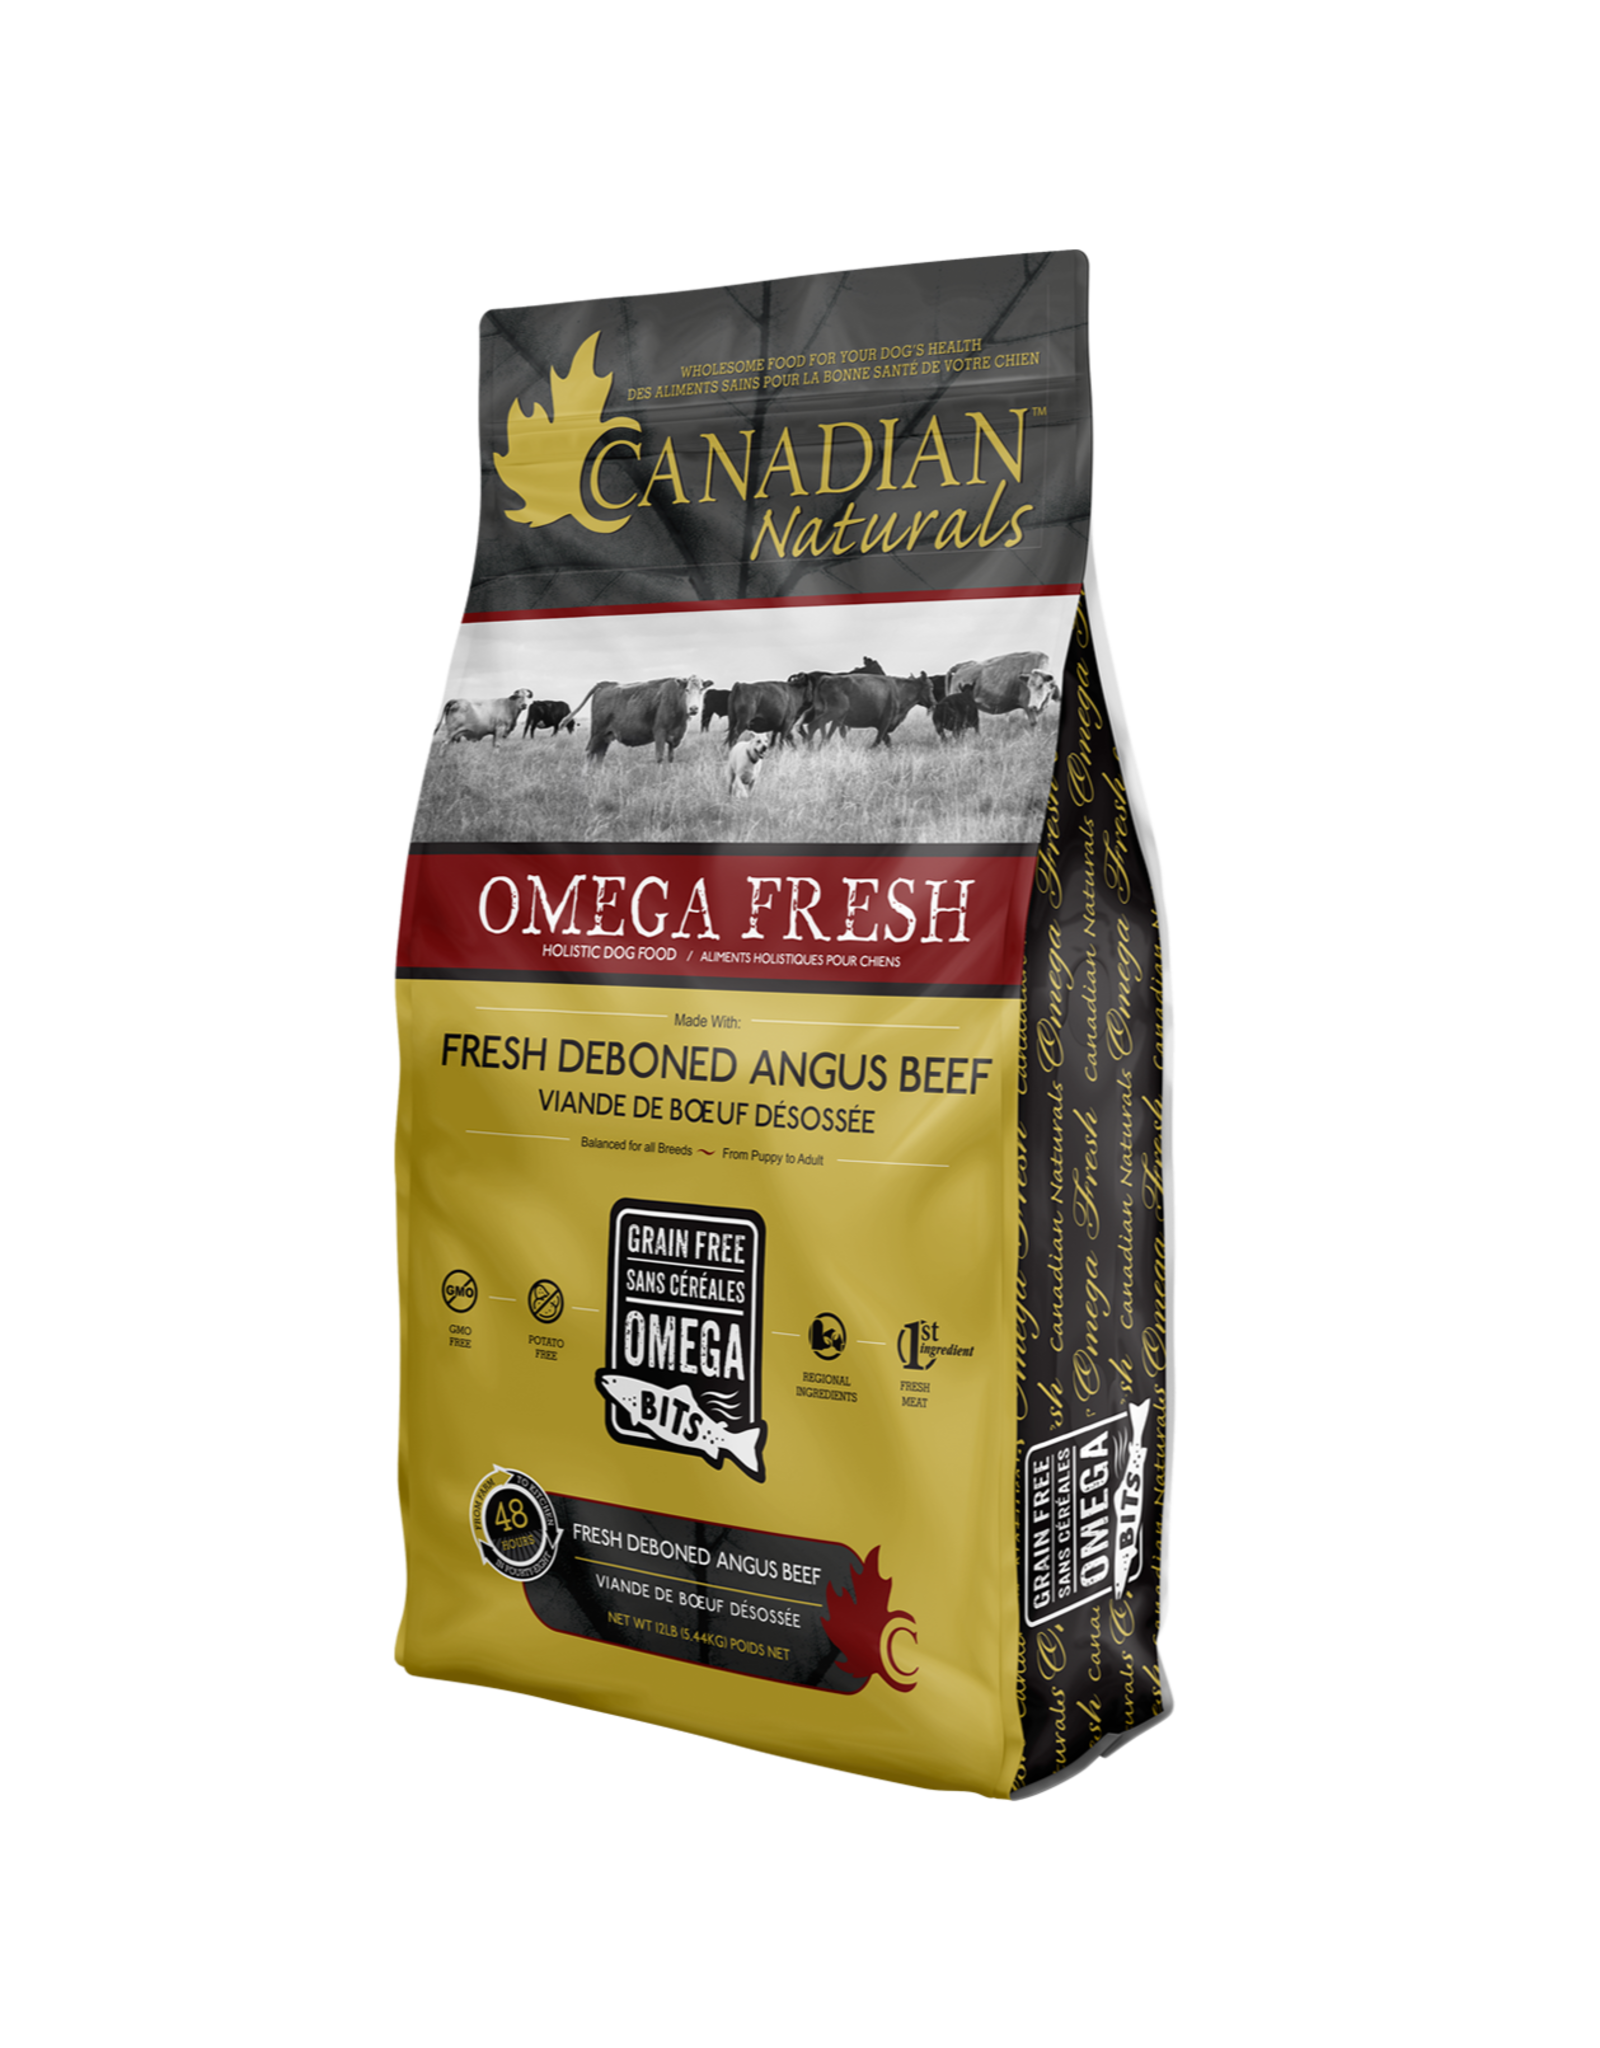 Canadian Naturals Canadian Naturals Omega Fresh Angus Beef